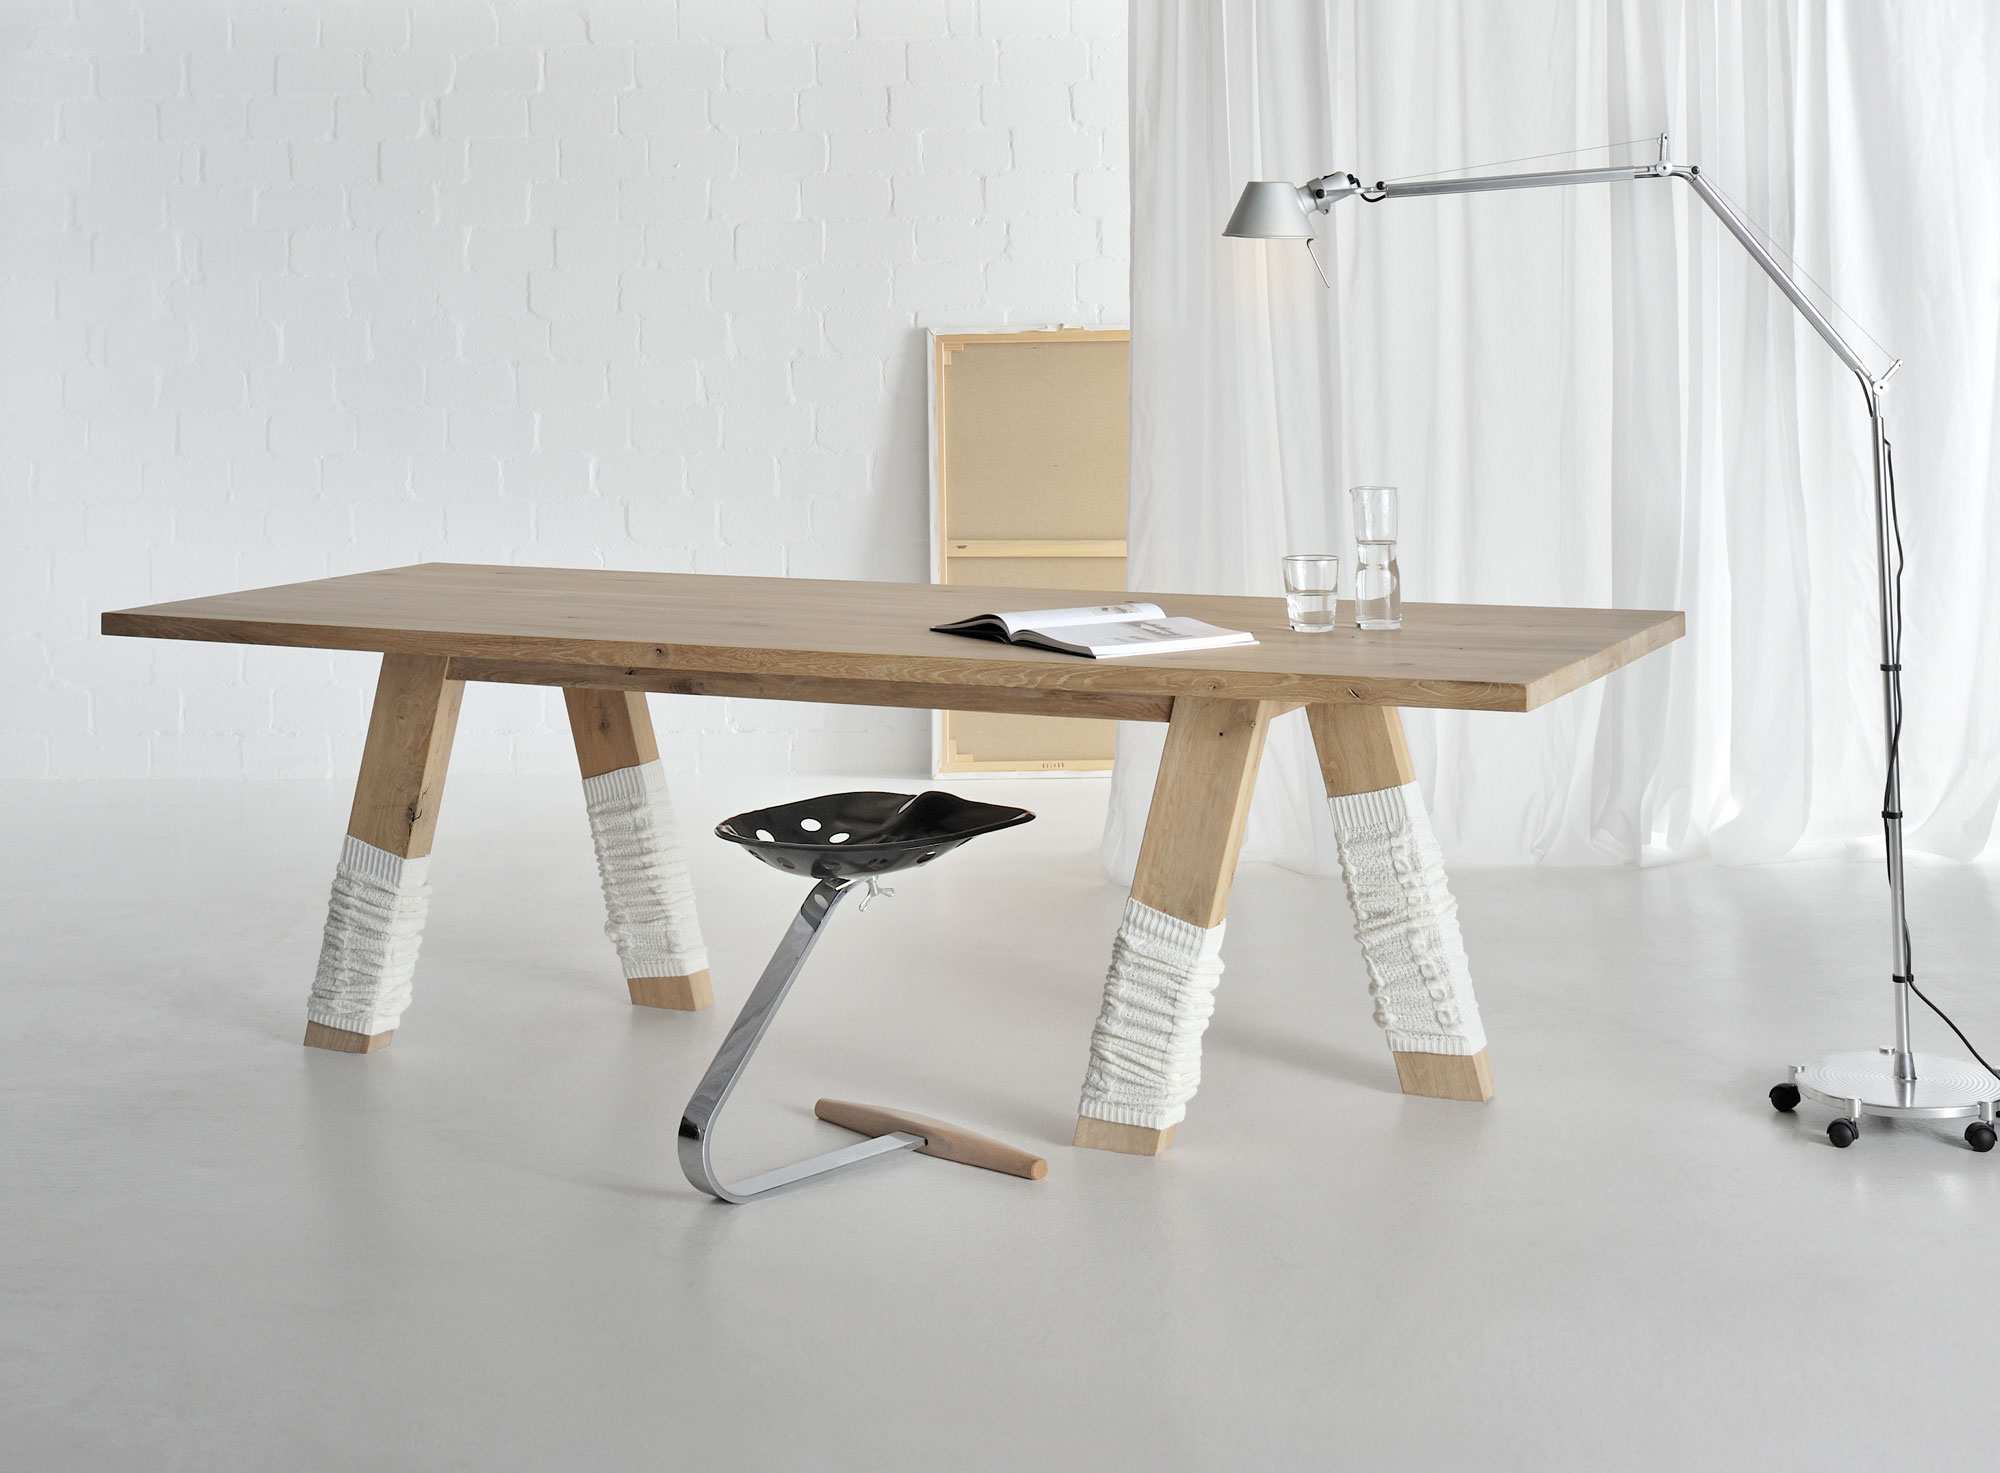 Table Leg Socks Accessory TABLE LEGWARMERS 3201a1 custom made in solid wood by vitamin design